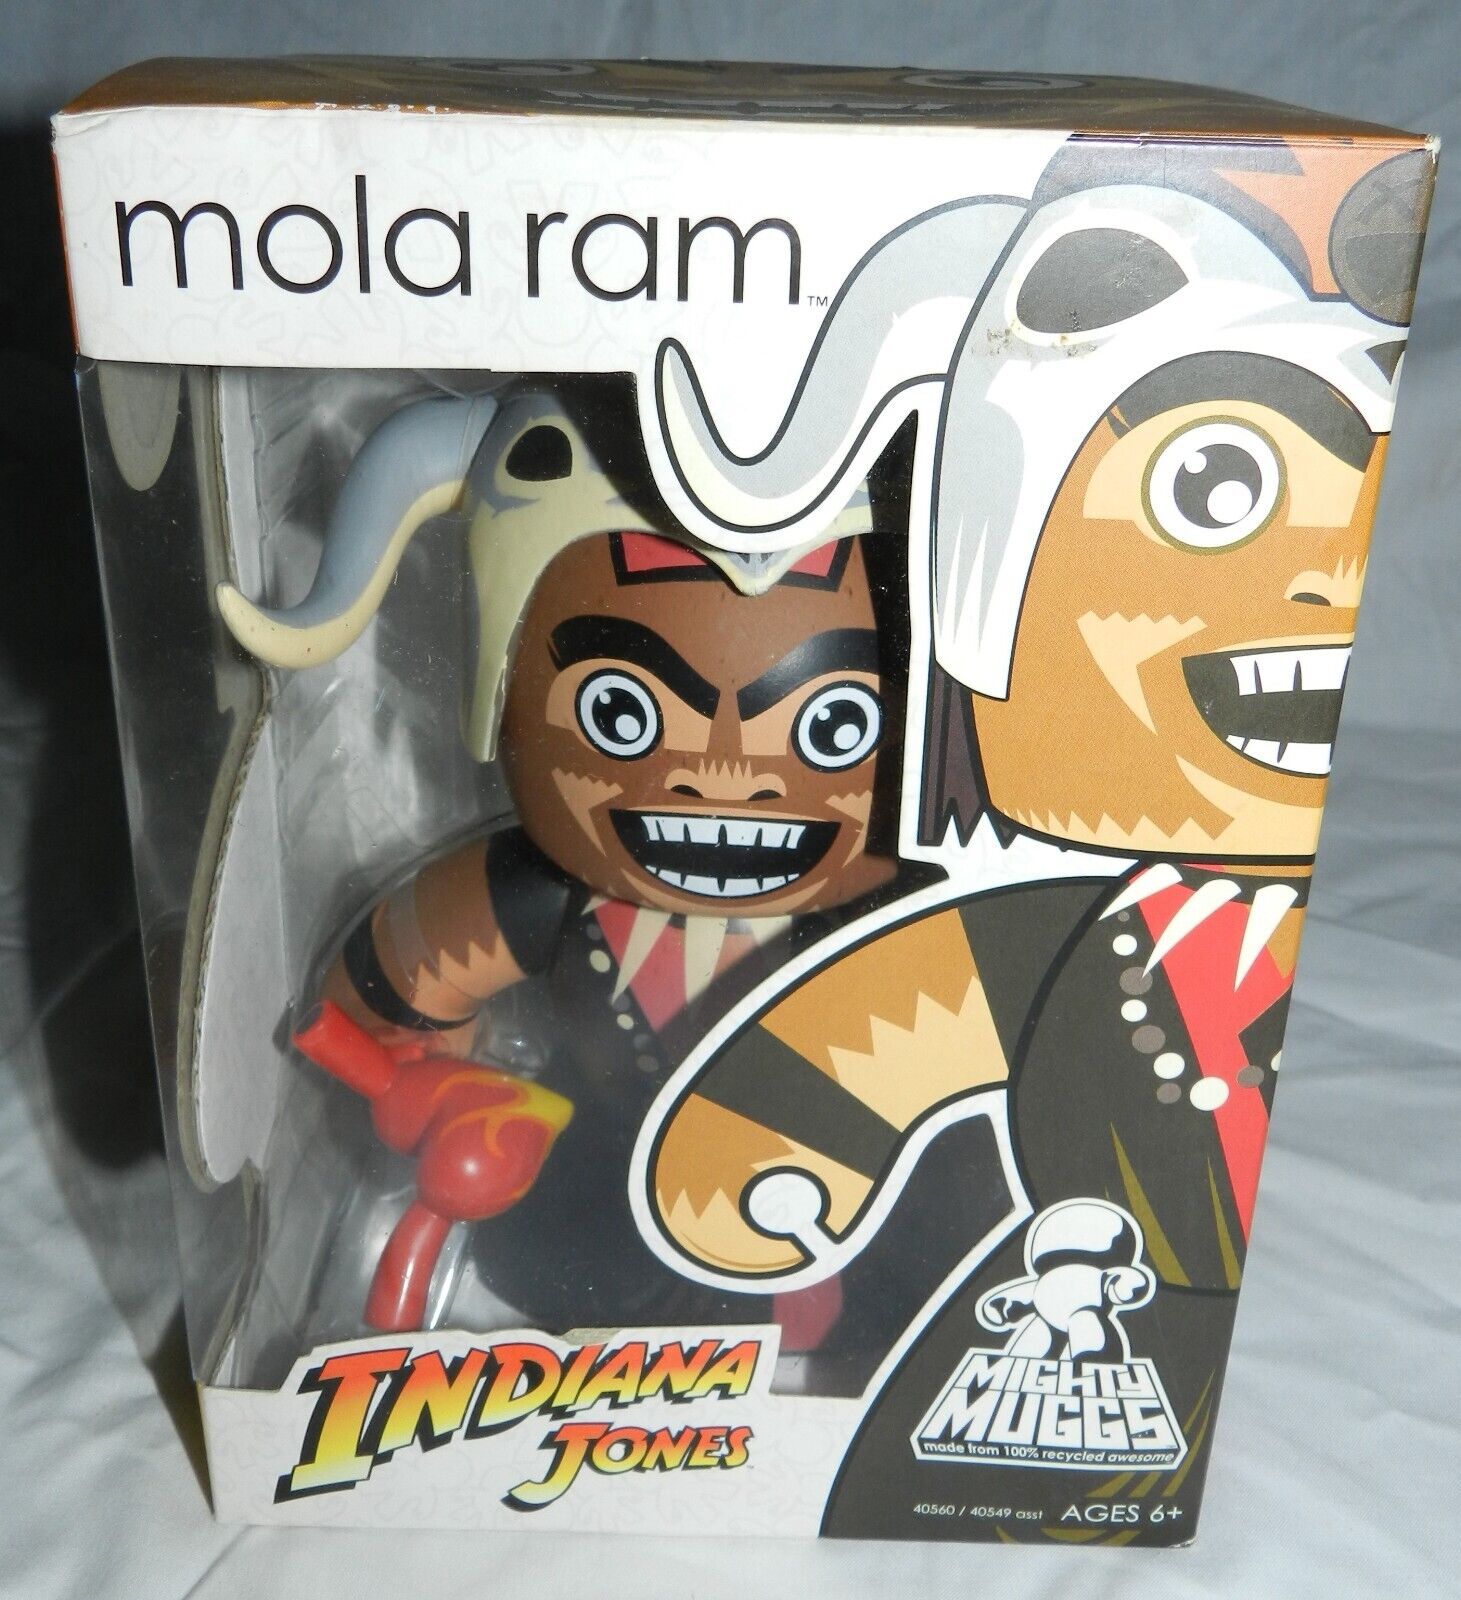 New in Box - Mighty Muggs Indiana Jones - Mola Ram vinyl figure